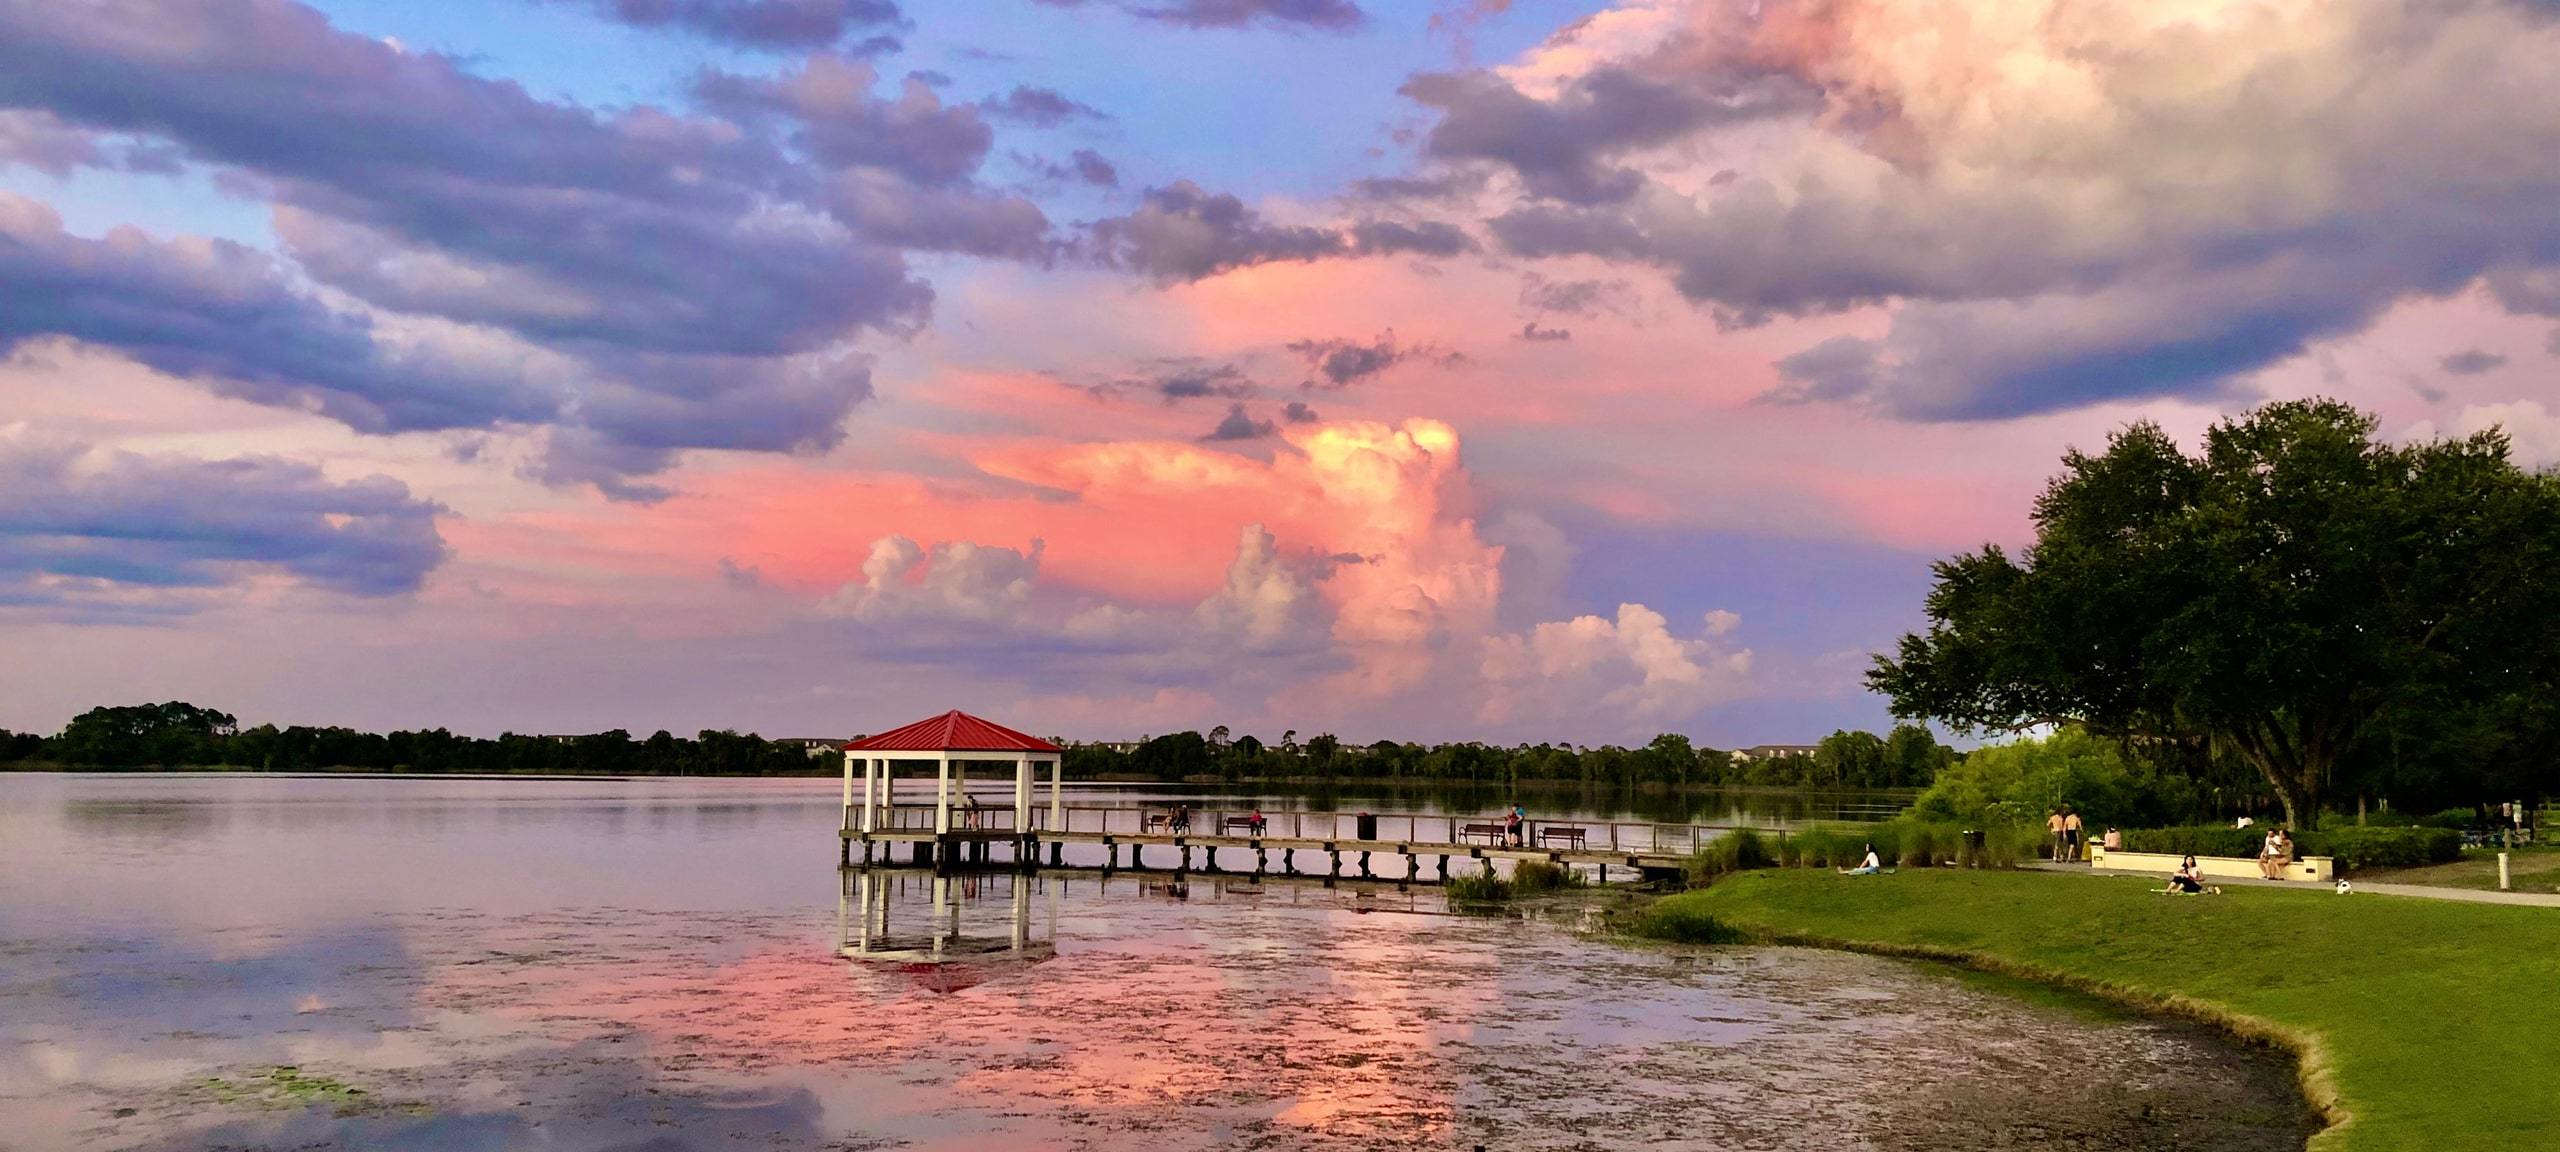 Sunset over gazebo and pier at Lake Baldwin in Baldwin Park, Orlando